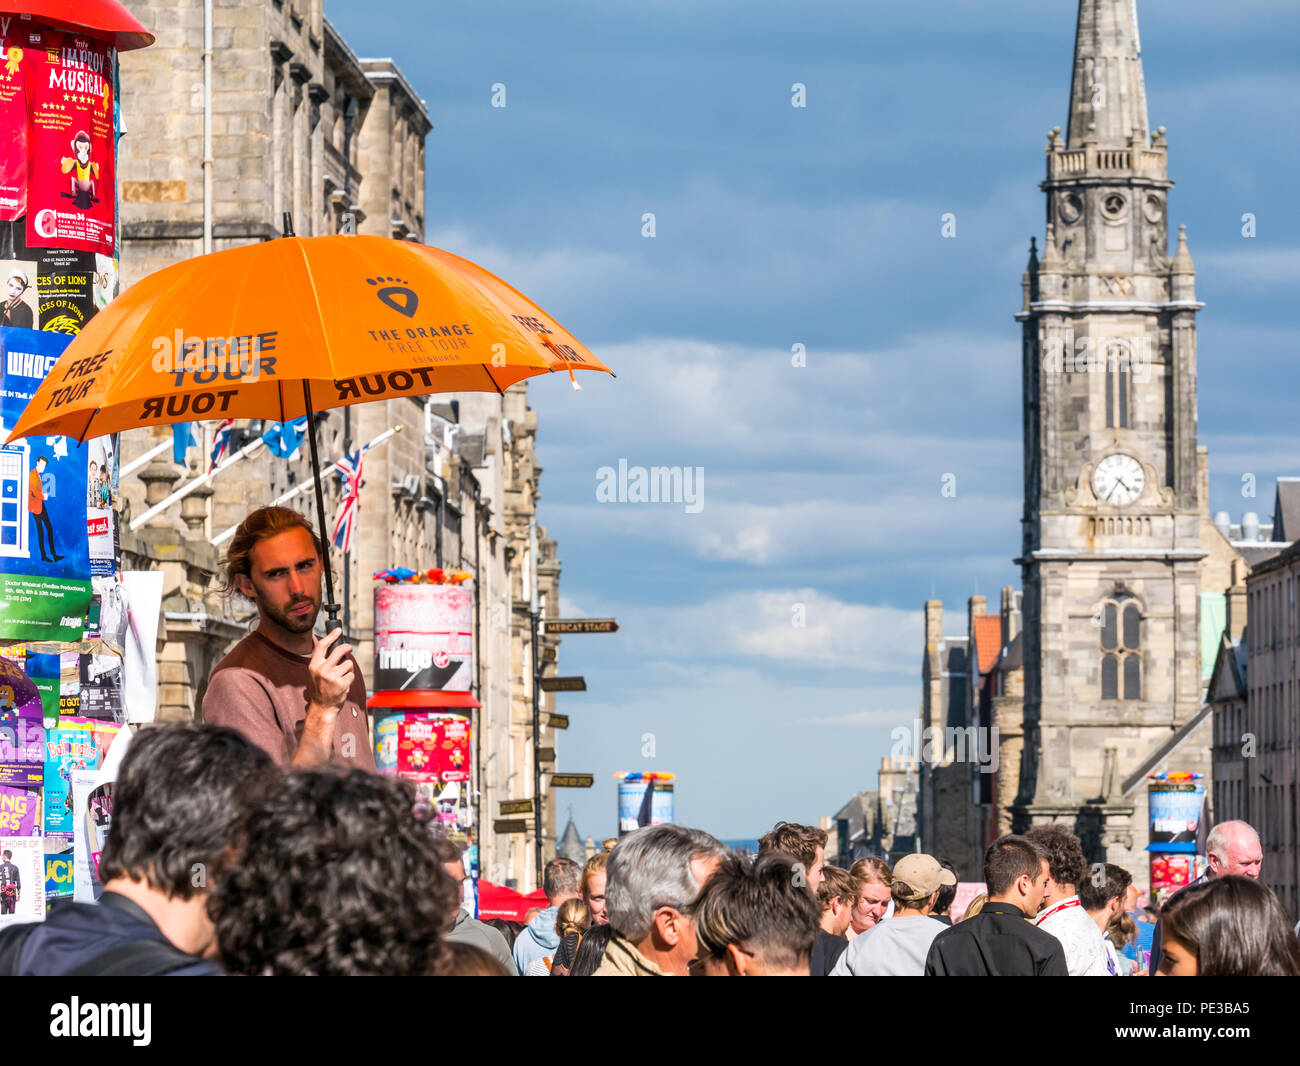 Man advertising free orange tour under umbrella with Tron Kirk spire and clock tower, Royal Mile, Edinburgh, Scotland, UK during Fringe festival Stock Photo